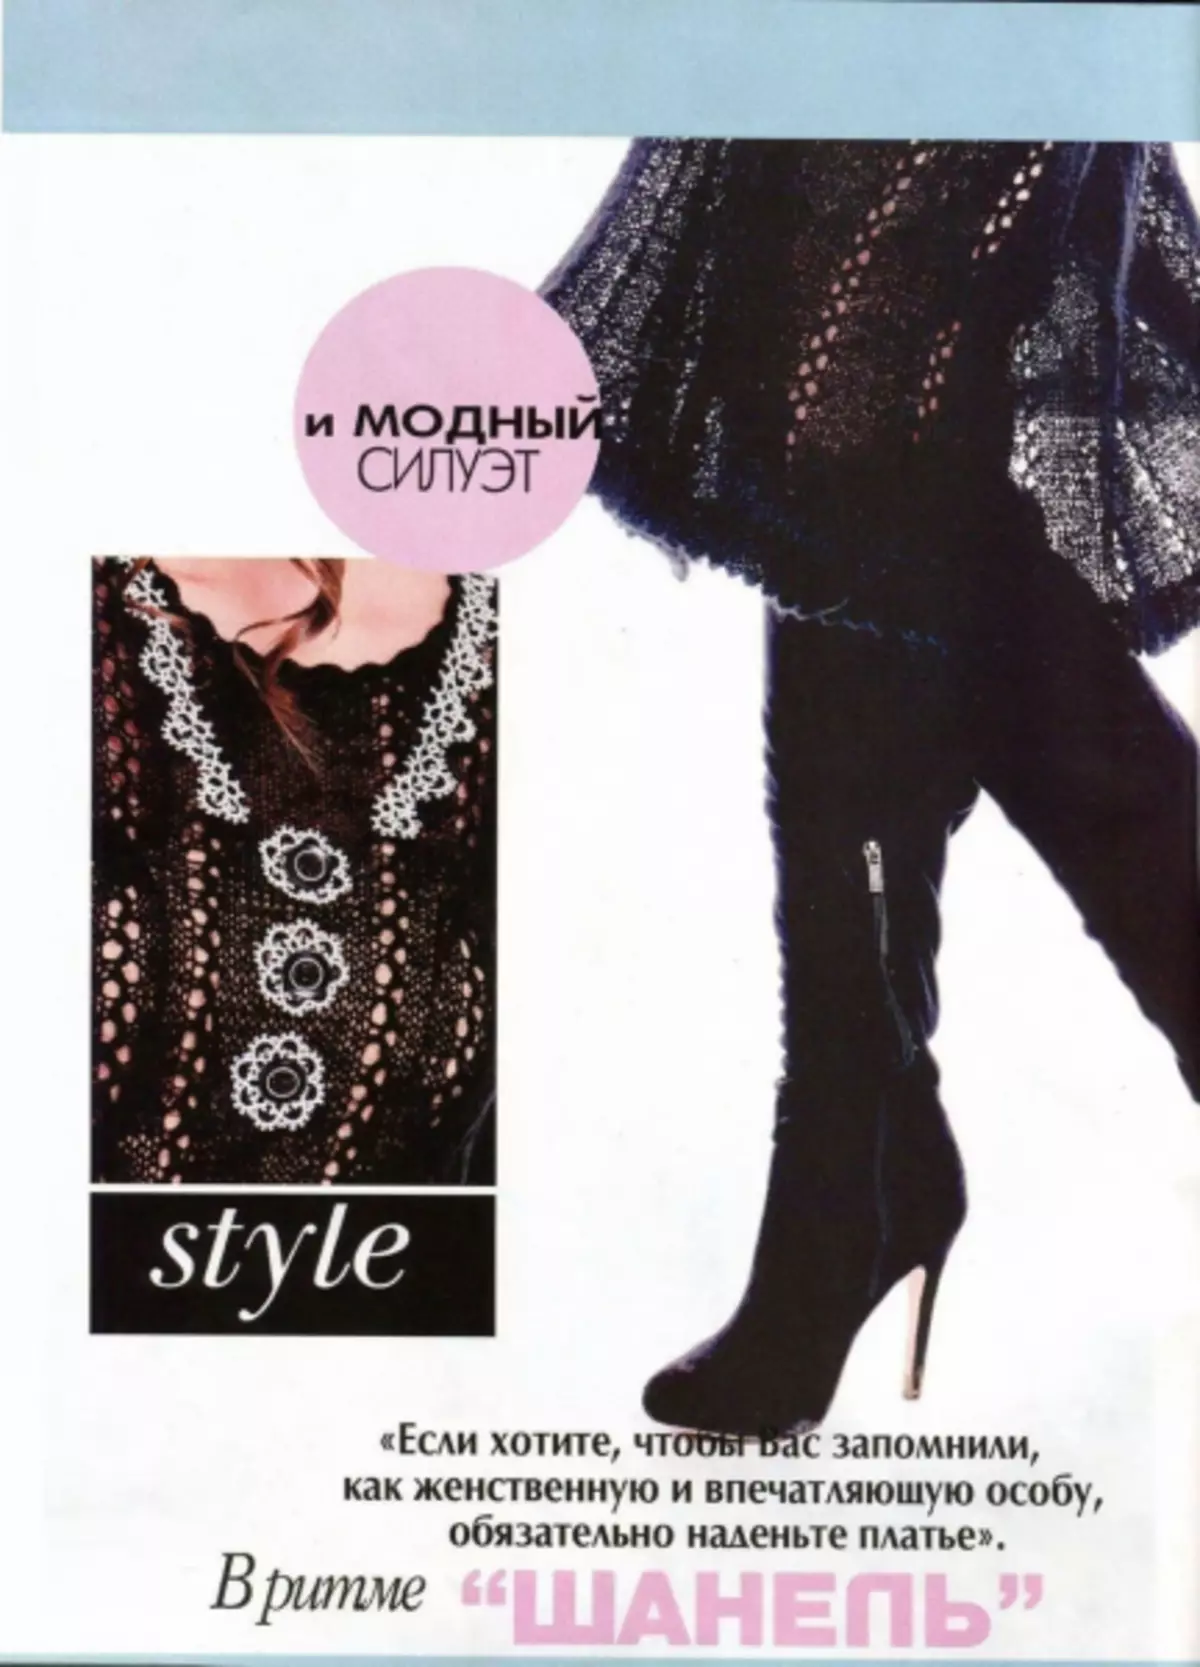 Magazine Fashion 616 - 2019. Modelos elegantes